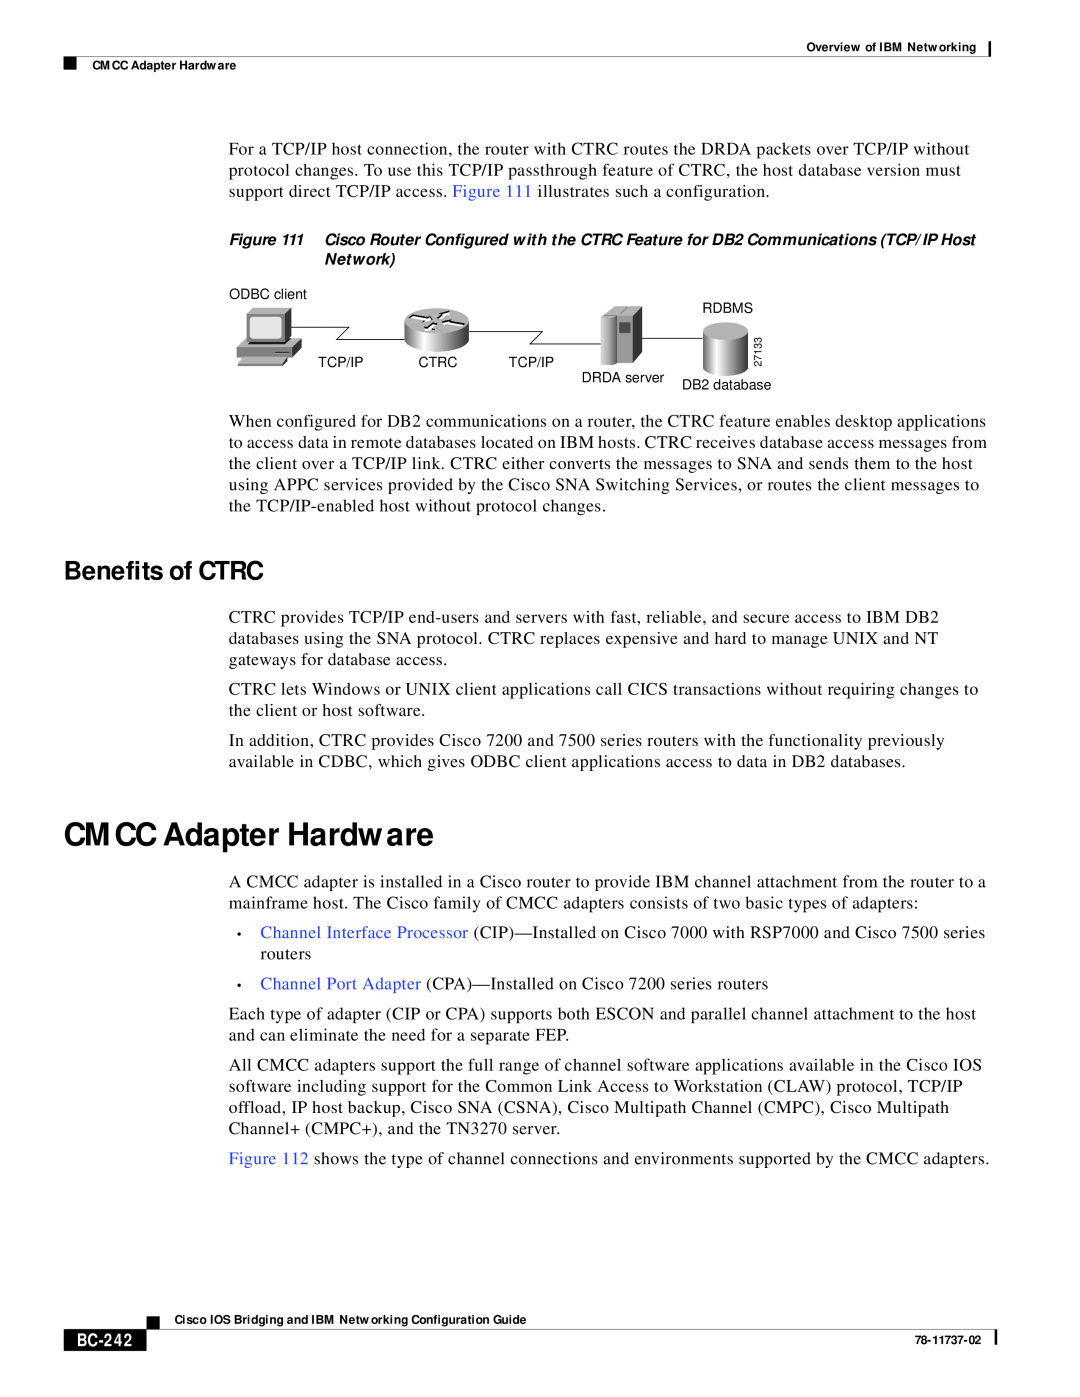 IBM BC-201 manual CMCC Adapter Hardware, Benefits of CTRC, BC-242 